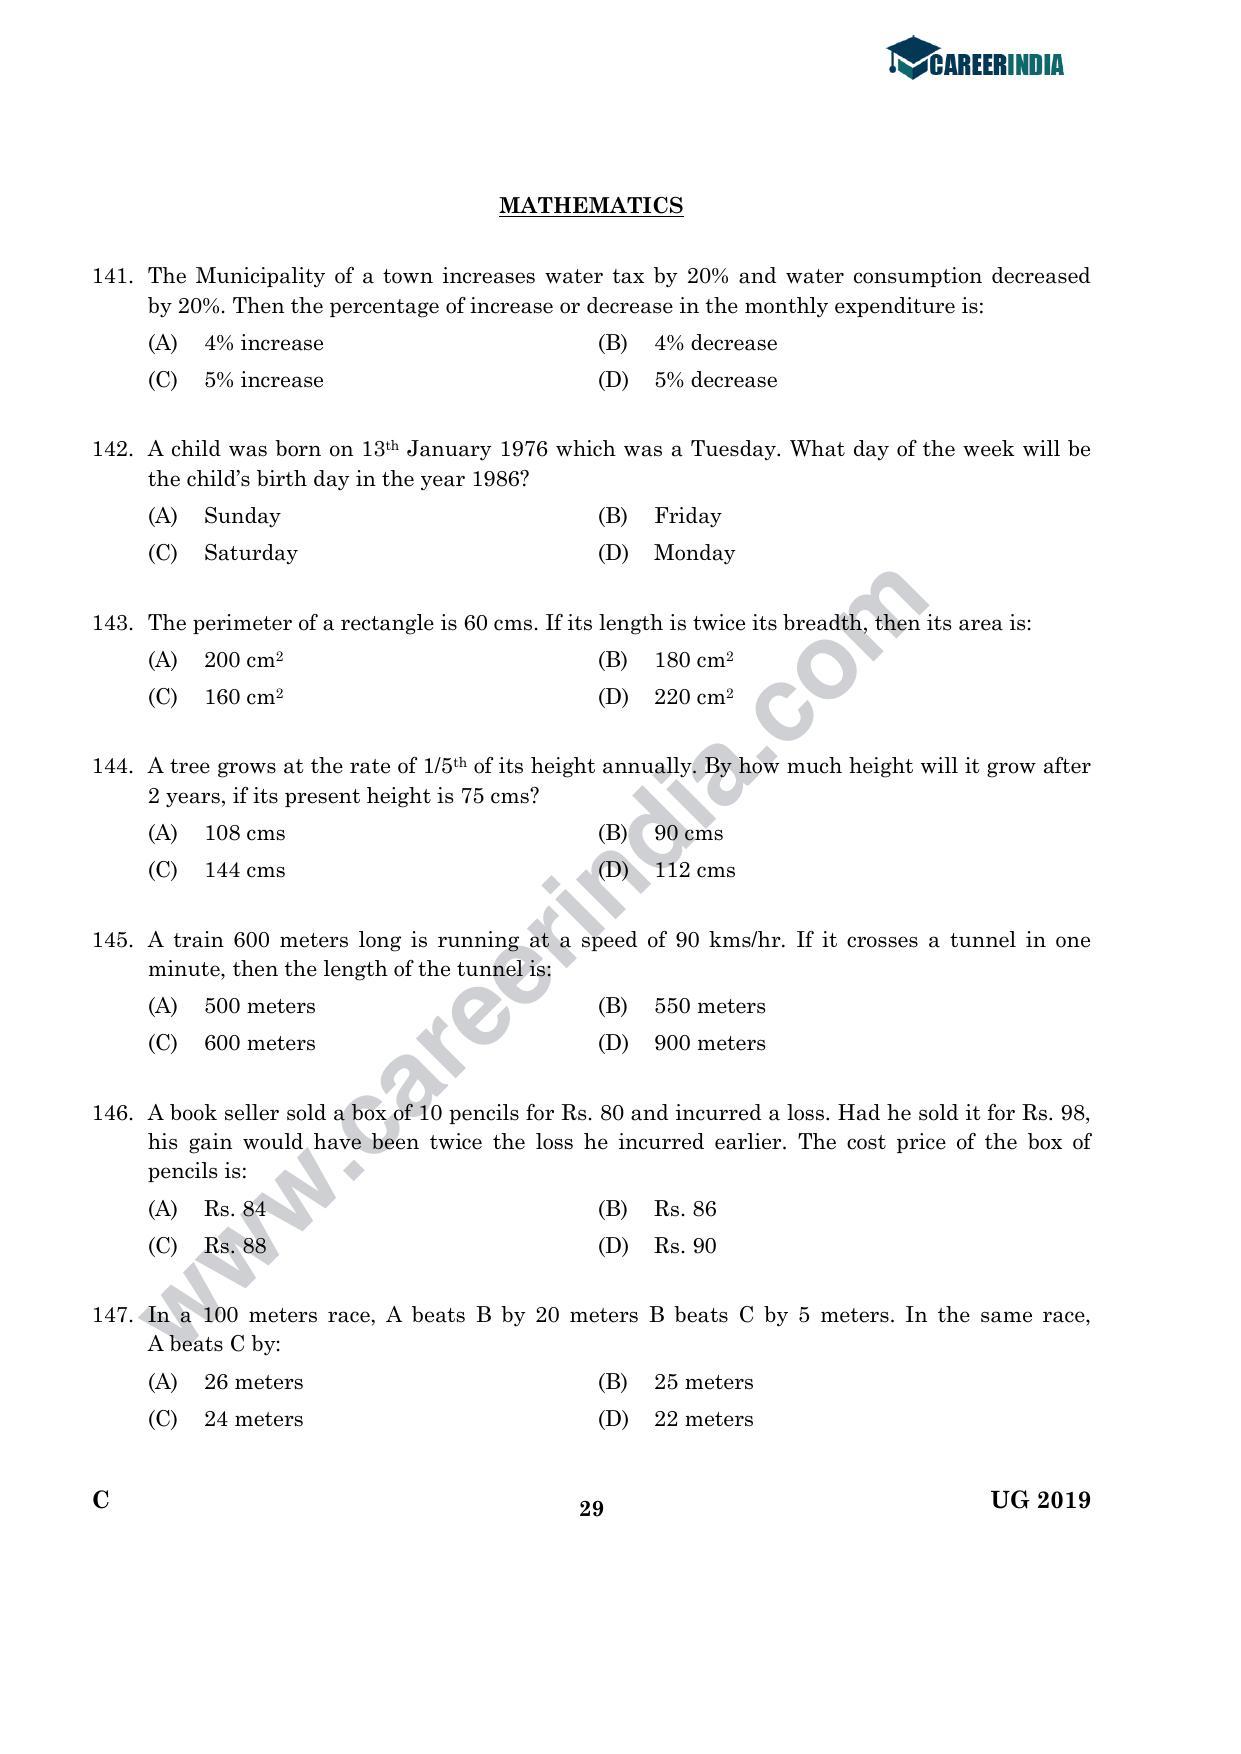 CLAT 2019 UG Legal-Aptitude Question Paper - Page 28